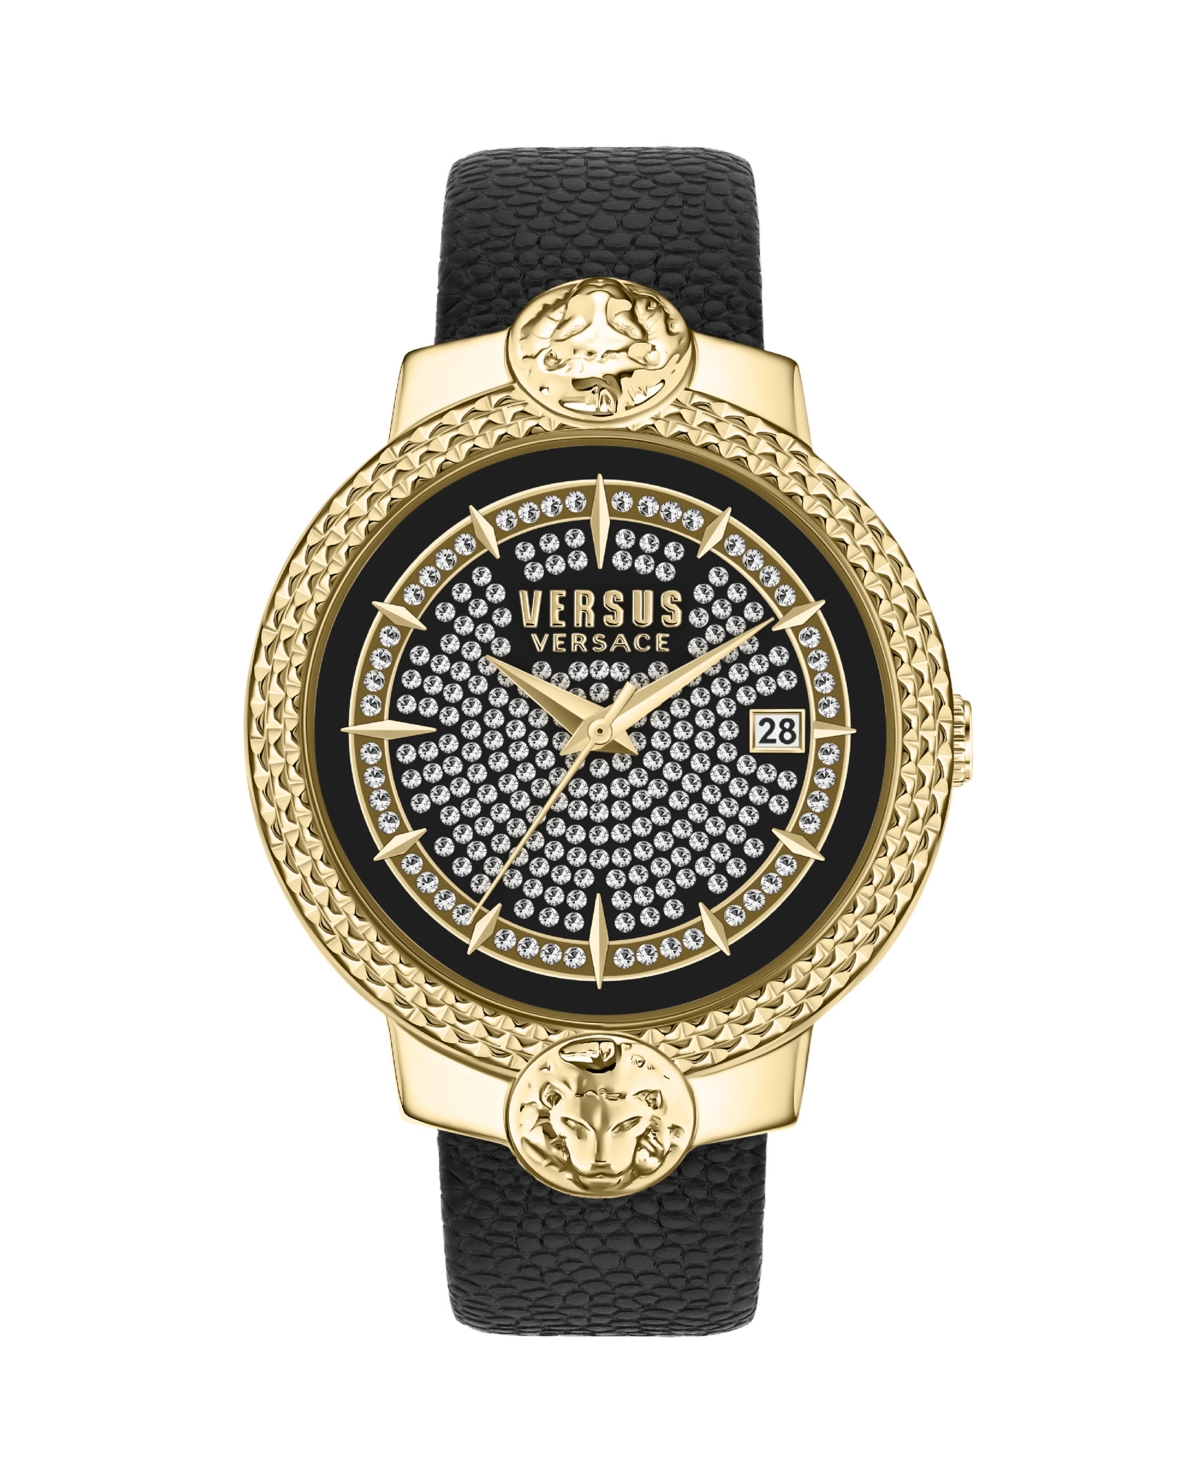 Versus Women's Watch 3 Hand Date Quartz Mouffetard Crystal Dial Black Leather Strap Watch 38mm In Gold